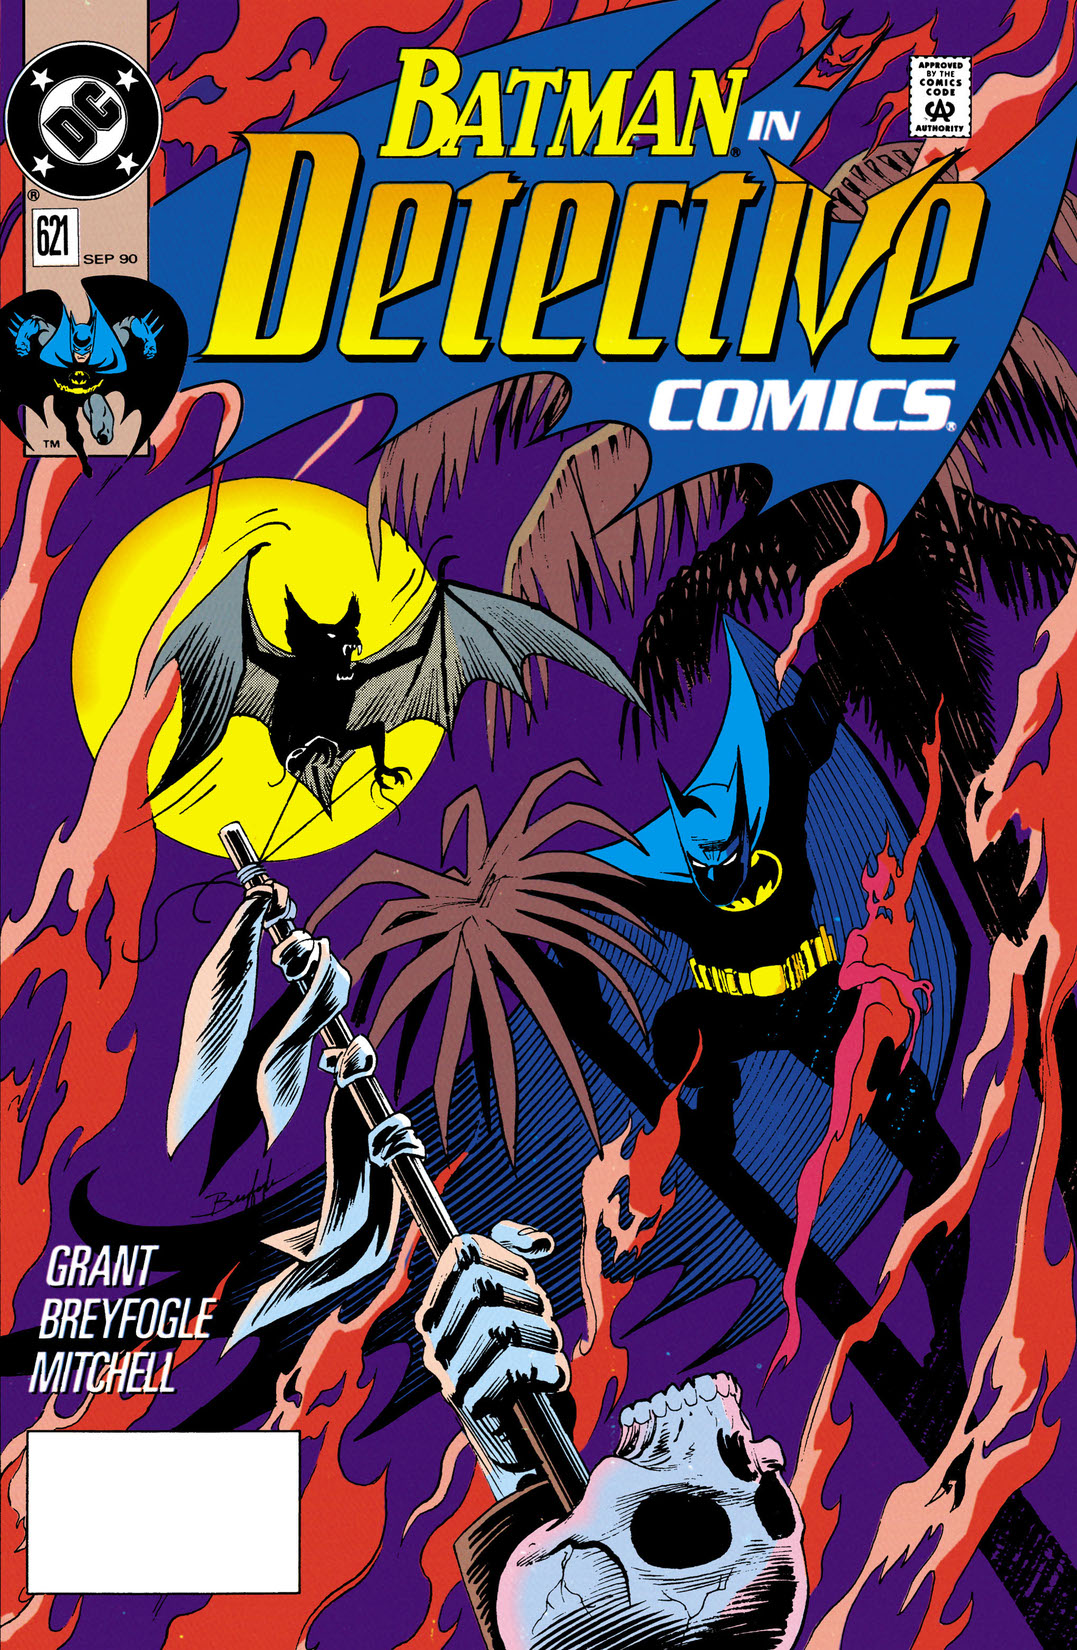 Detective Comics (1937-) #621 preview images